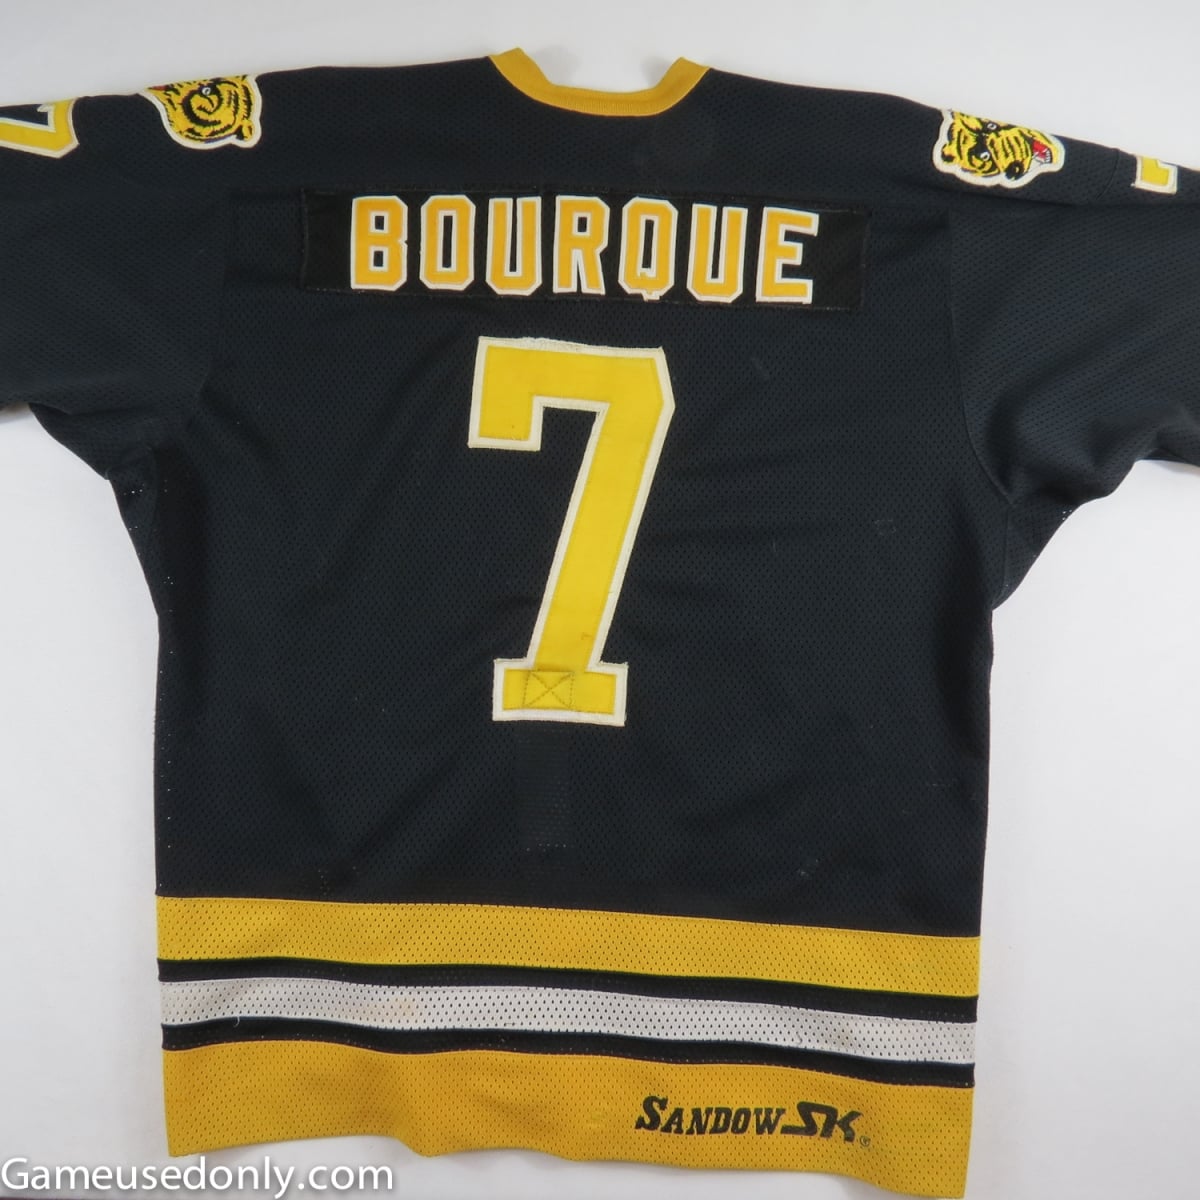 Ray Bourque Boston Bruins away jersey skating 77 8x10 11x14 16x20 photo 133 Size 8x10 